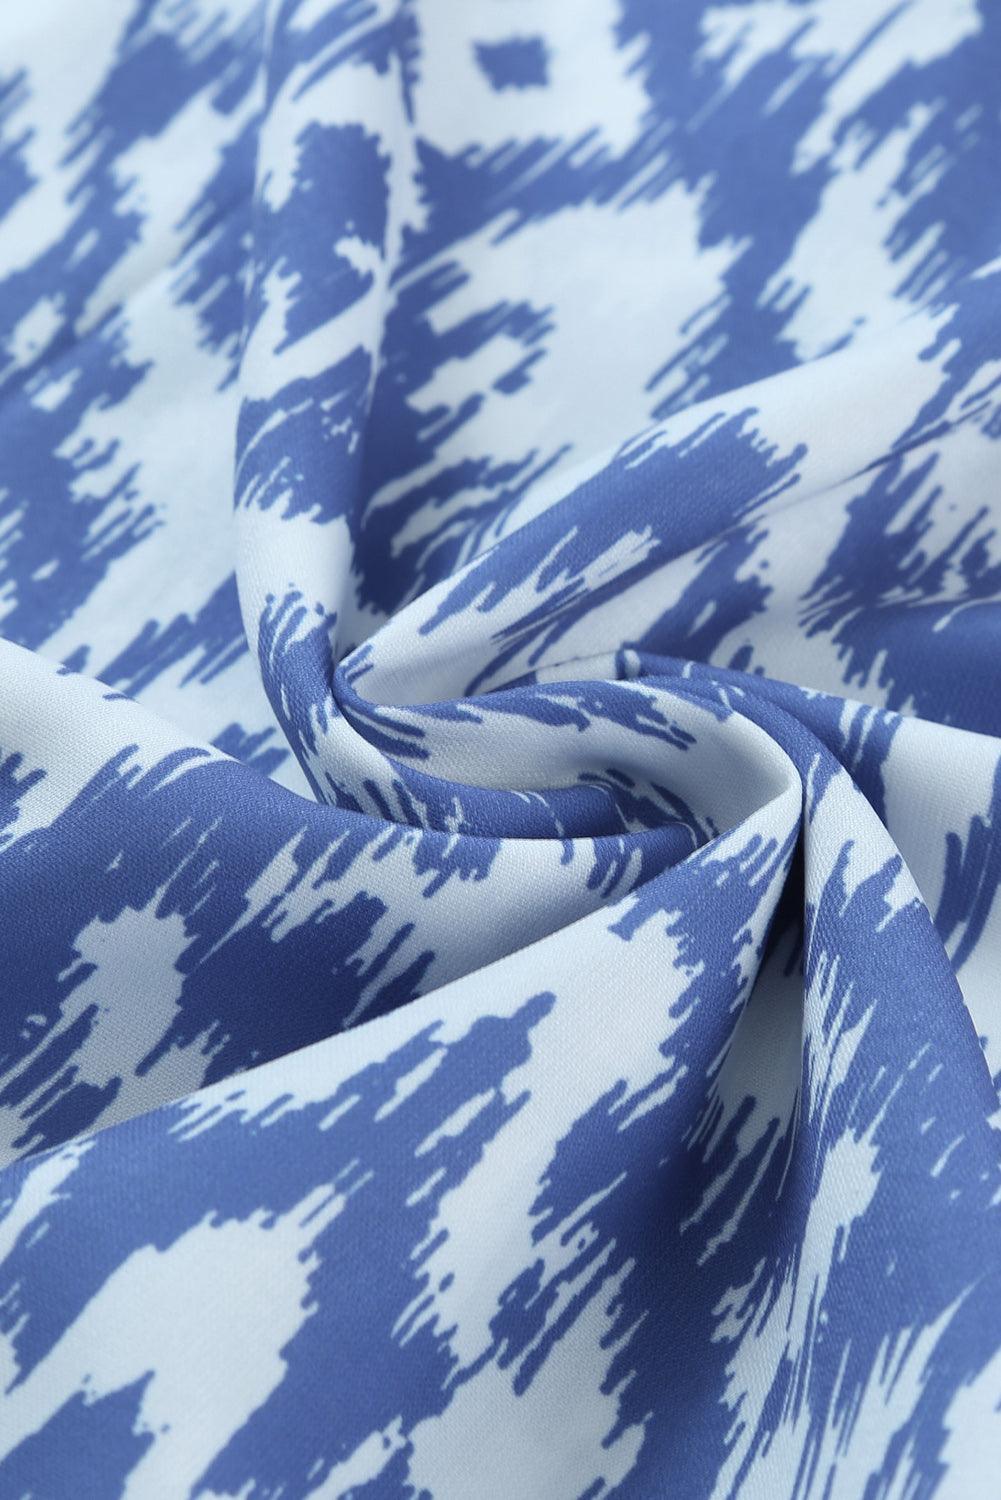 Sky Blue Geometric Print Casual V Neck Maxi Dress - Ninonine